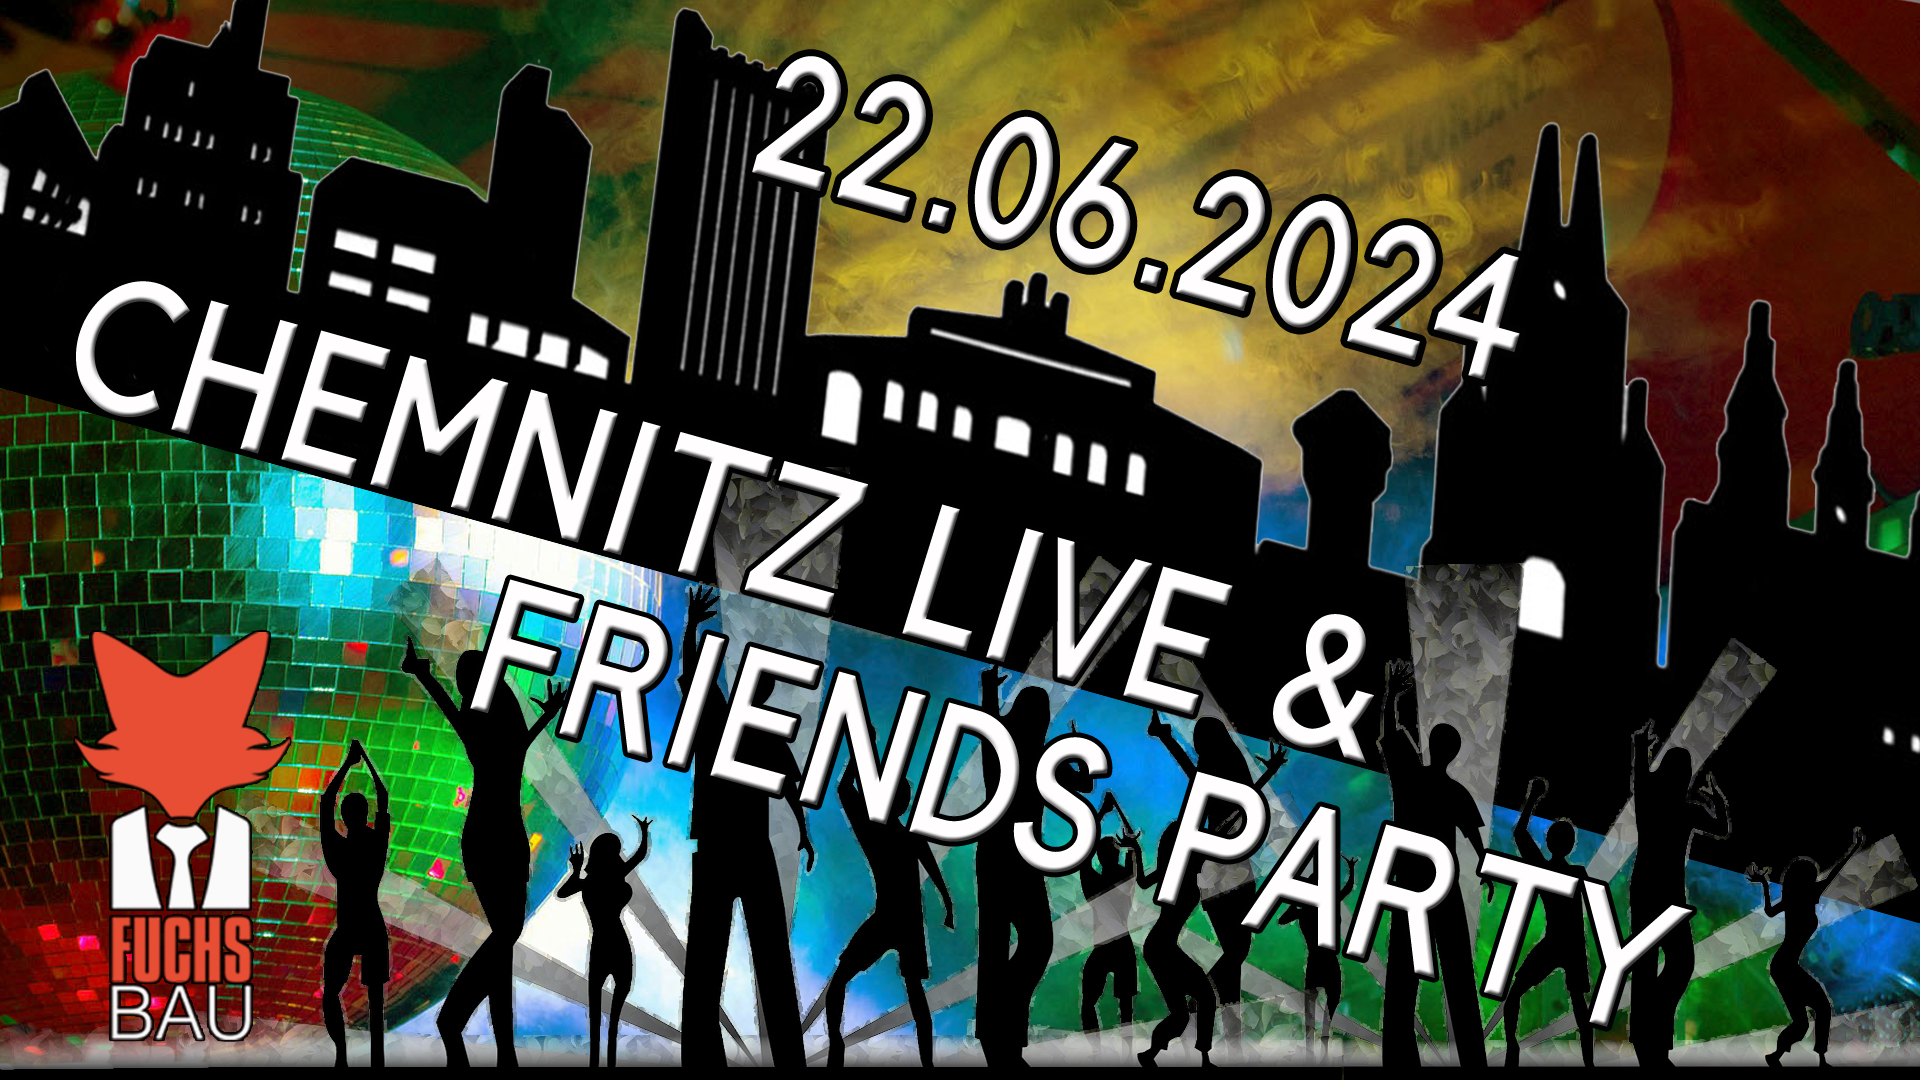 22.06.2024 Chemnitz Live & Friends Party